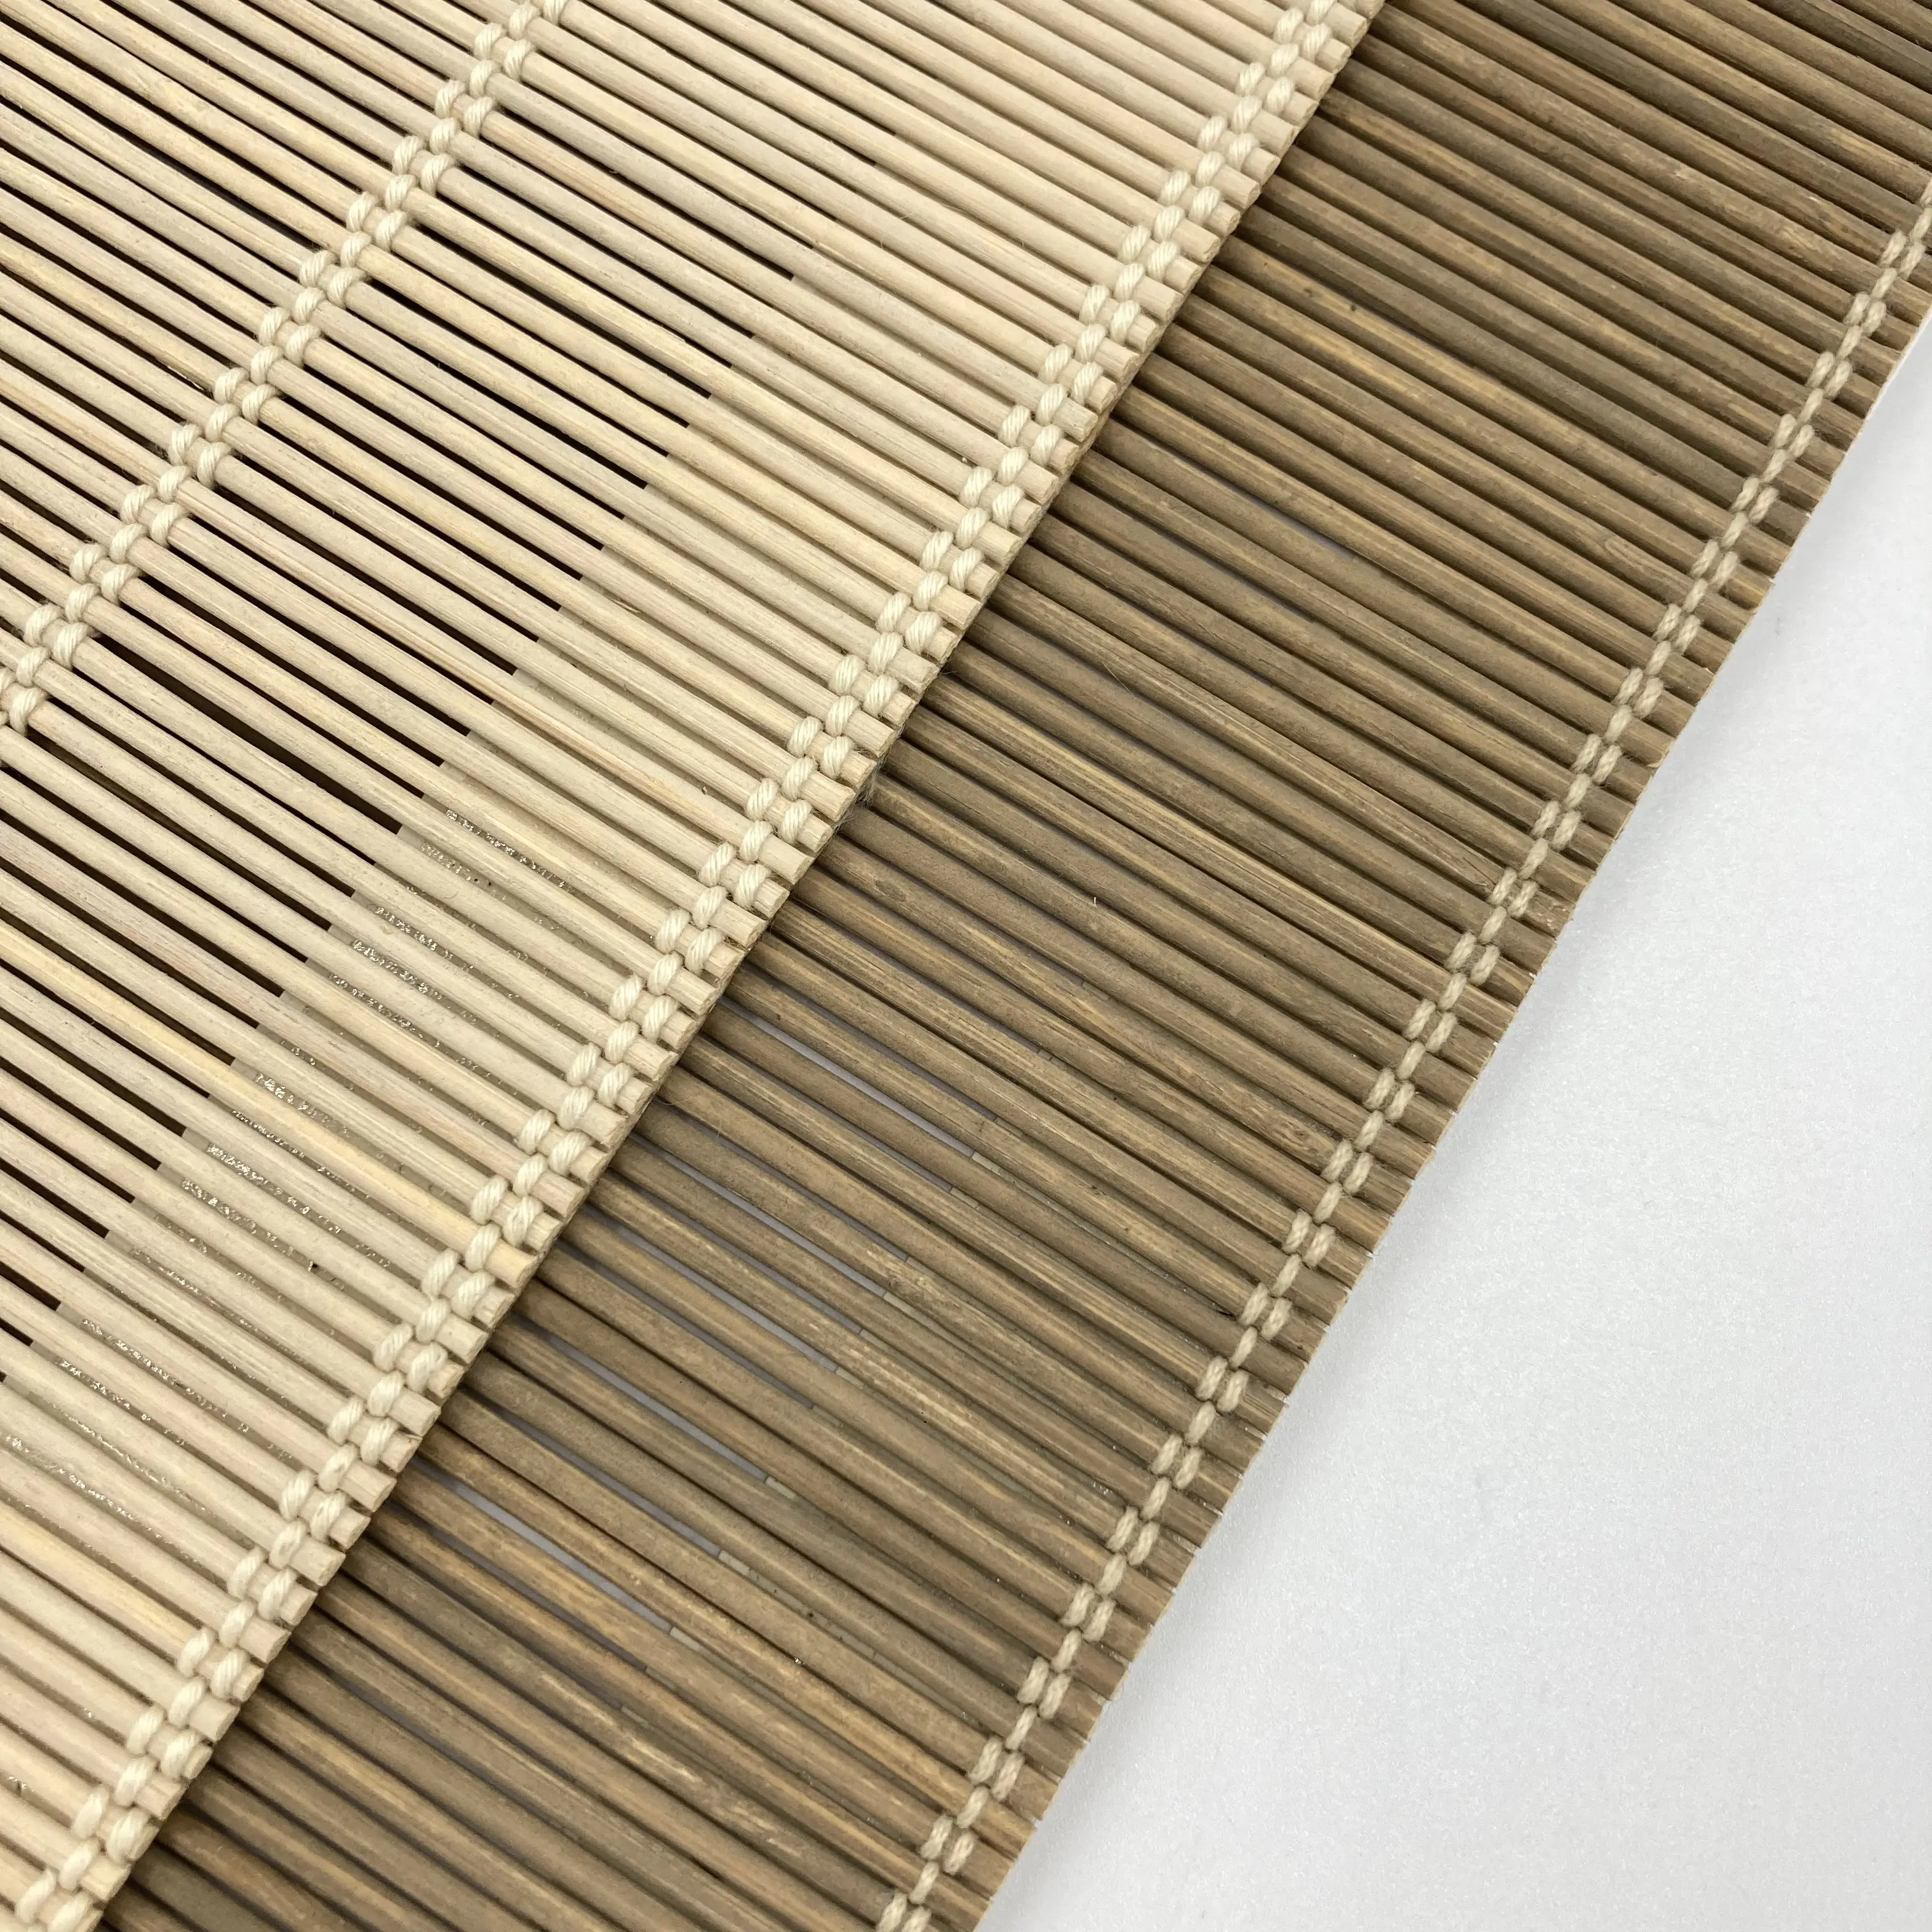 Natural Bamboo Blinds Fabric